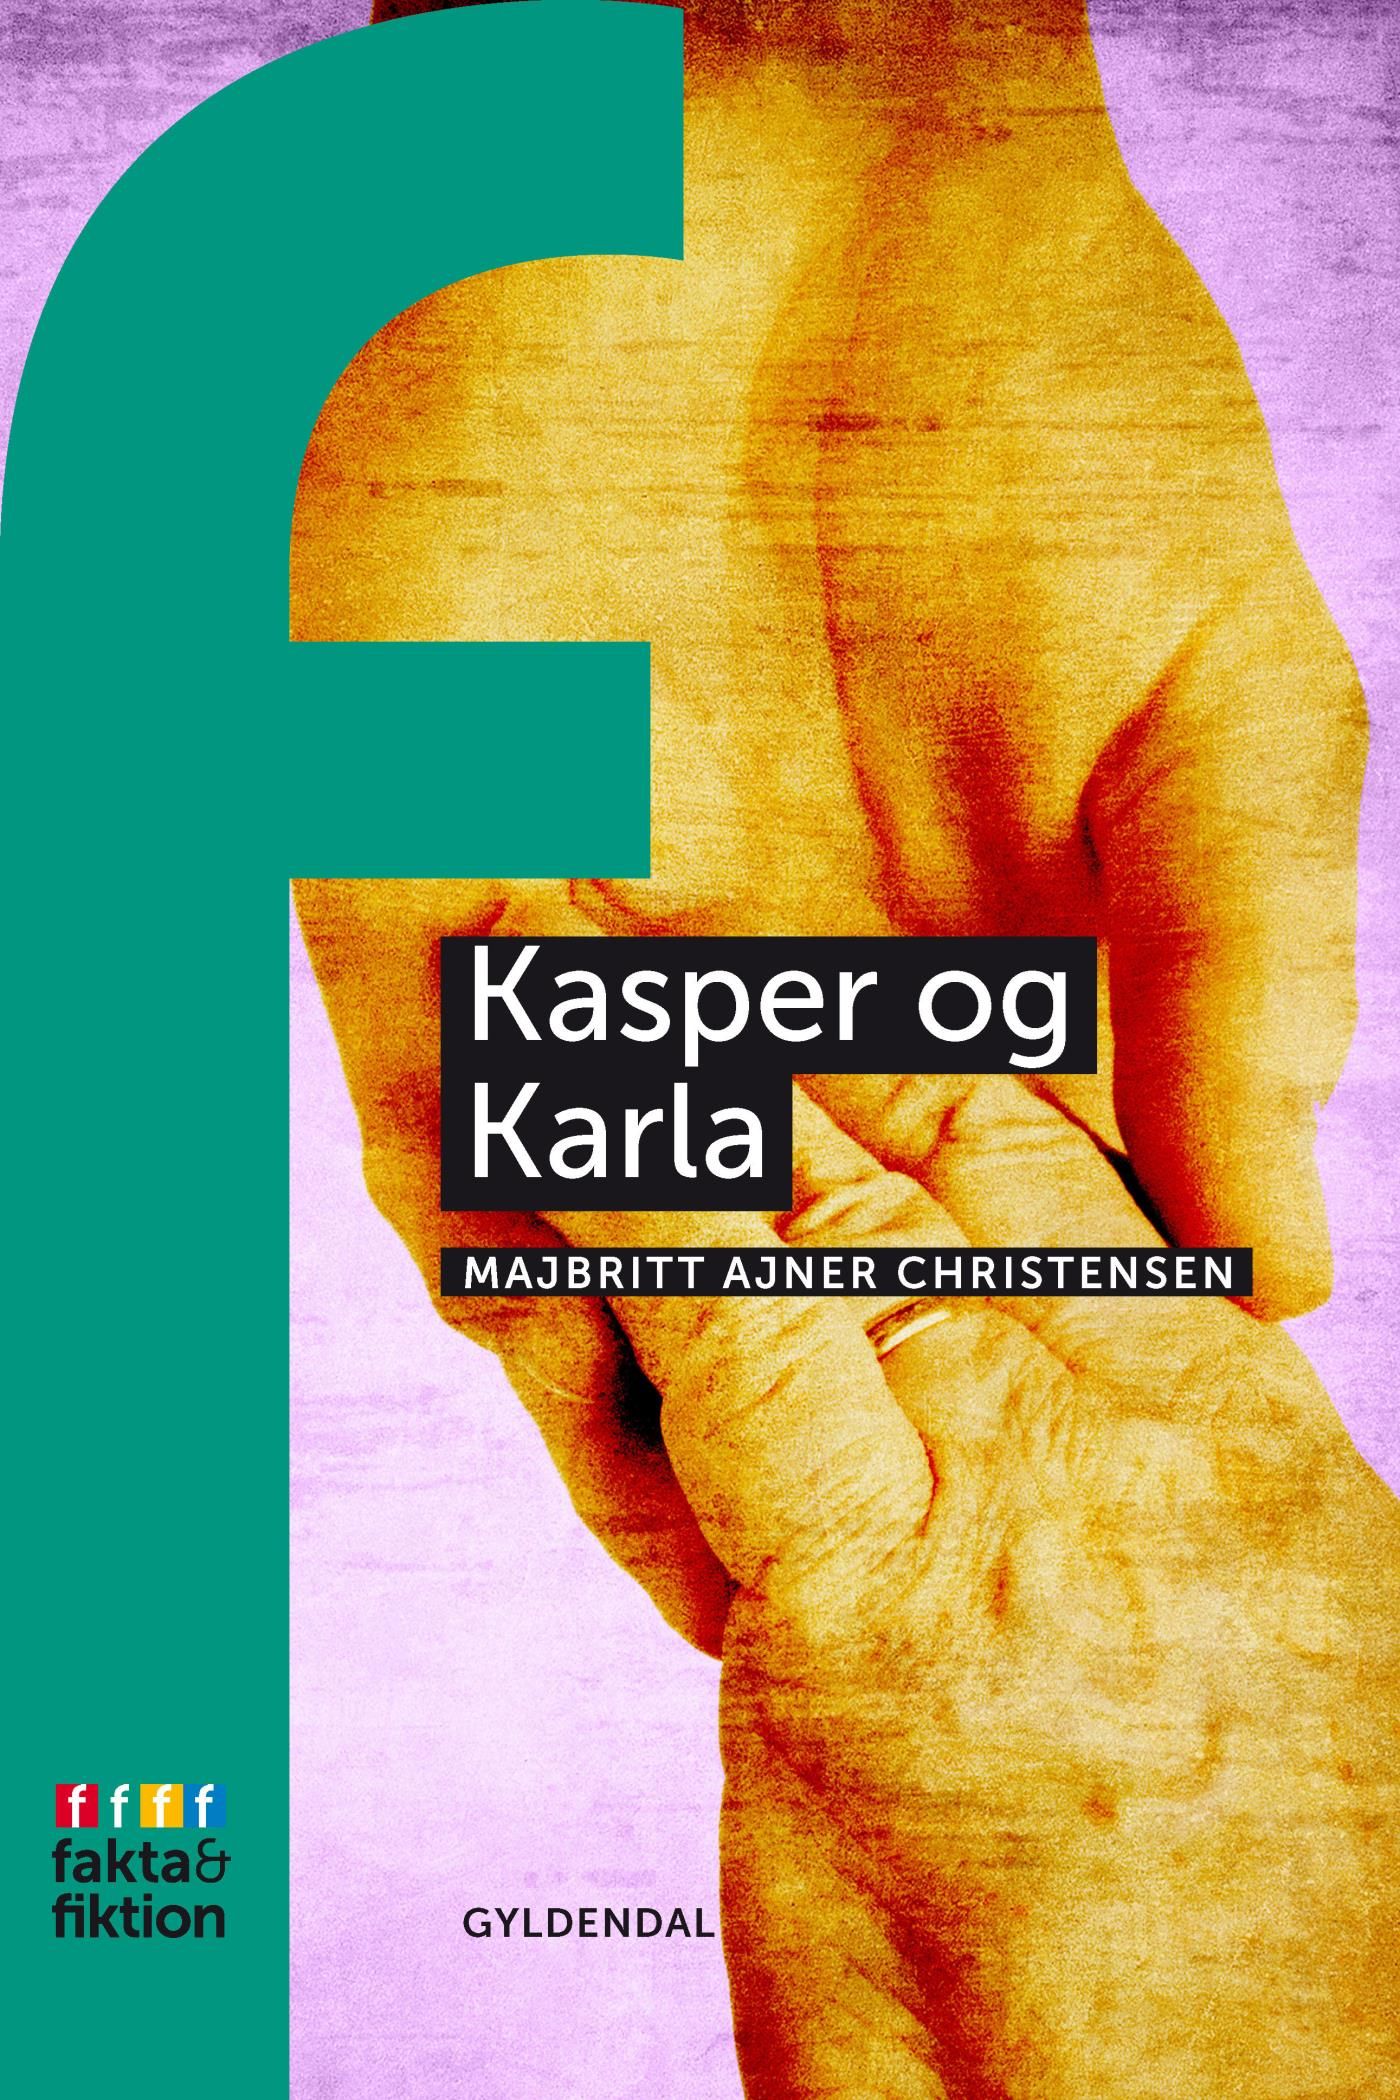 Kasper og Karla, e-bog af MajBritt Ajner Christiansen